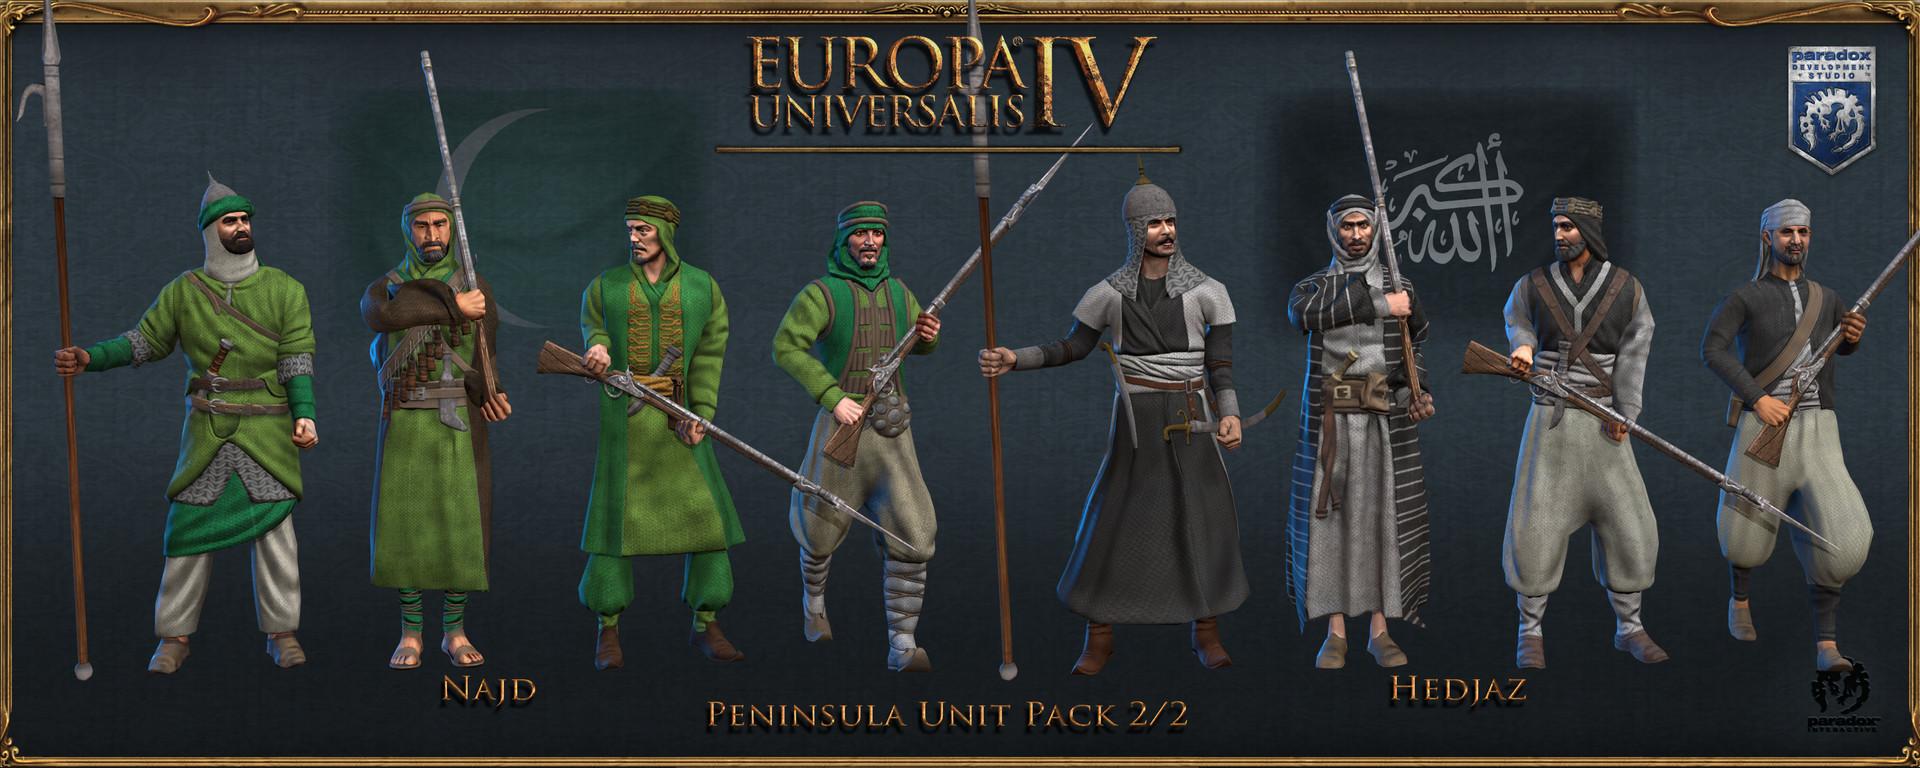 Content Pack - Europa Universalis IV: Cradle of Civilization